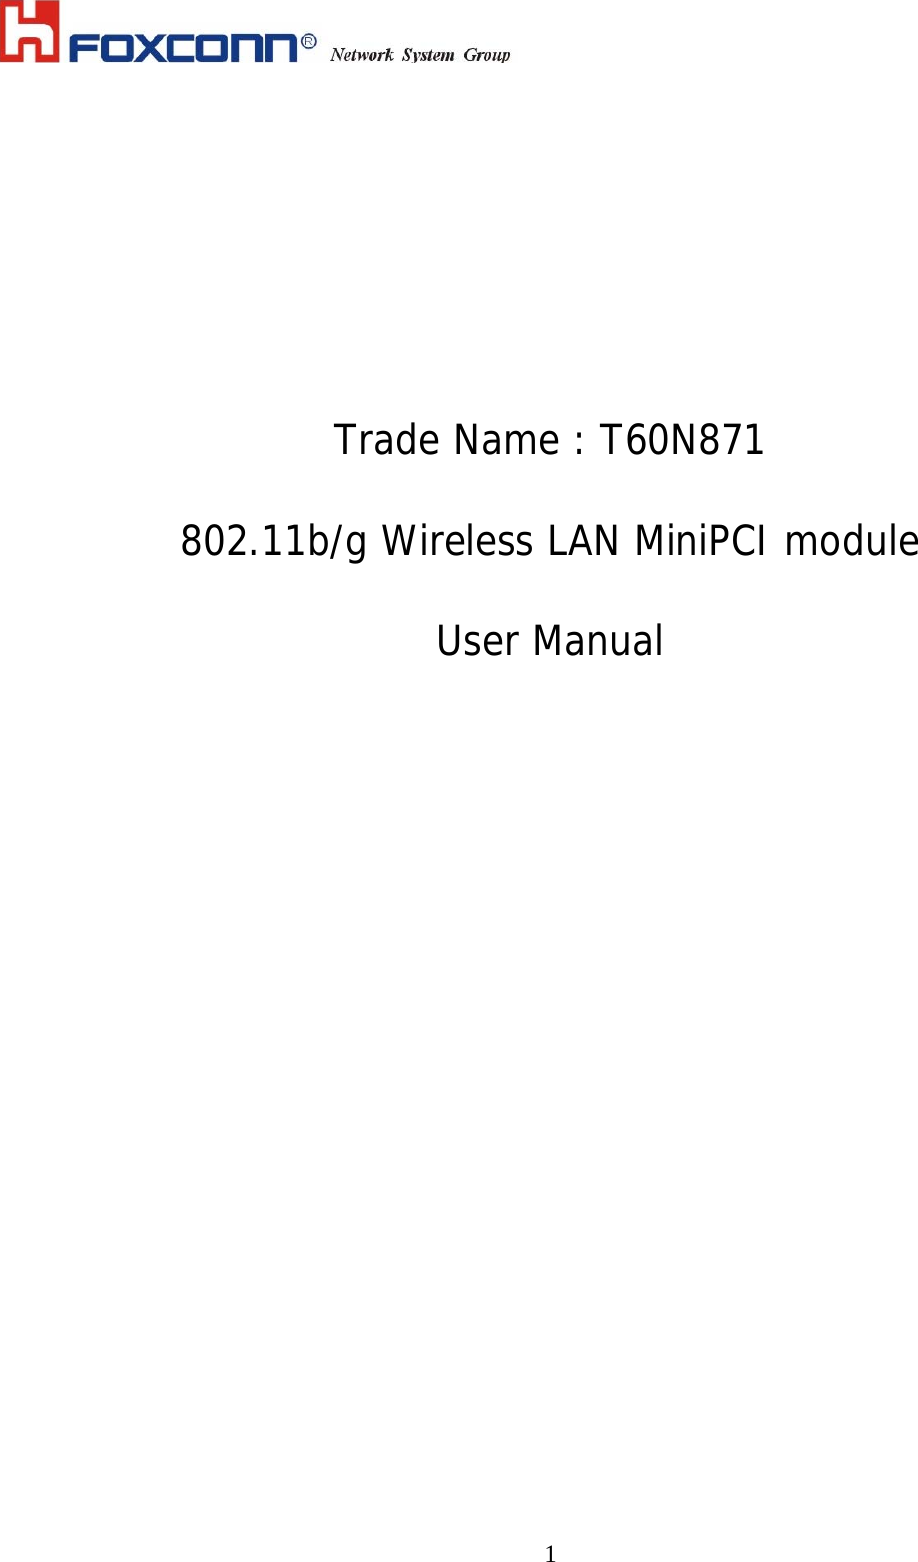    1      Trade Name : T60N871  802.11b/g Wireless LAN MiniPCI module   User Manual   